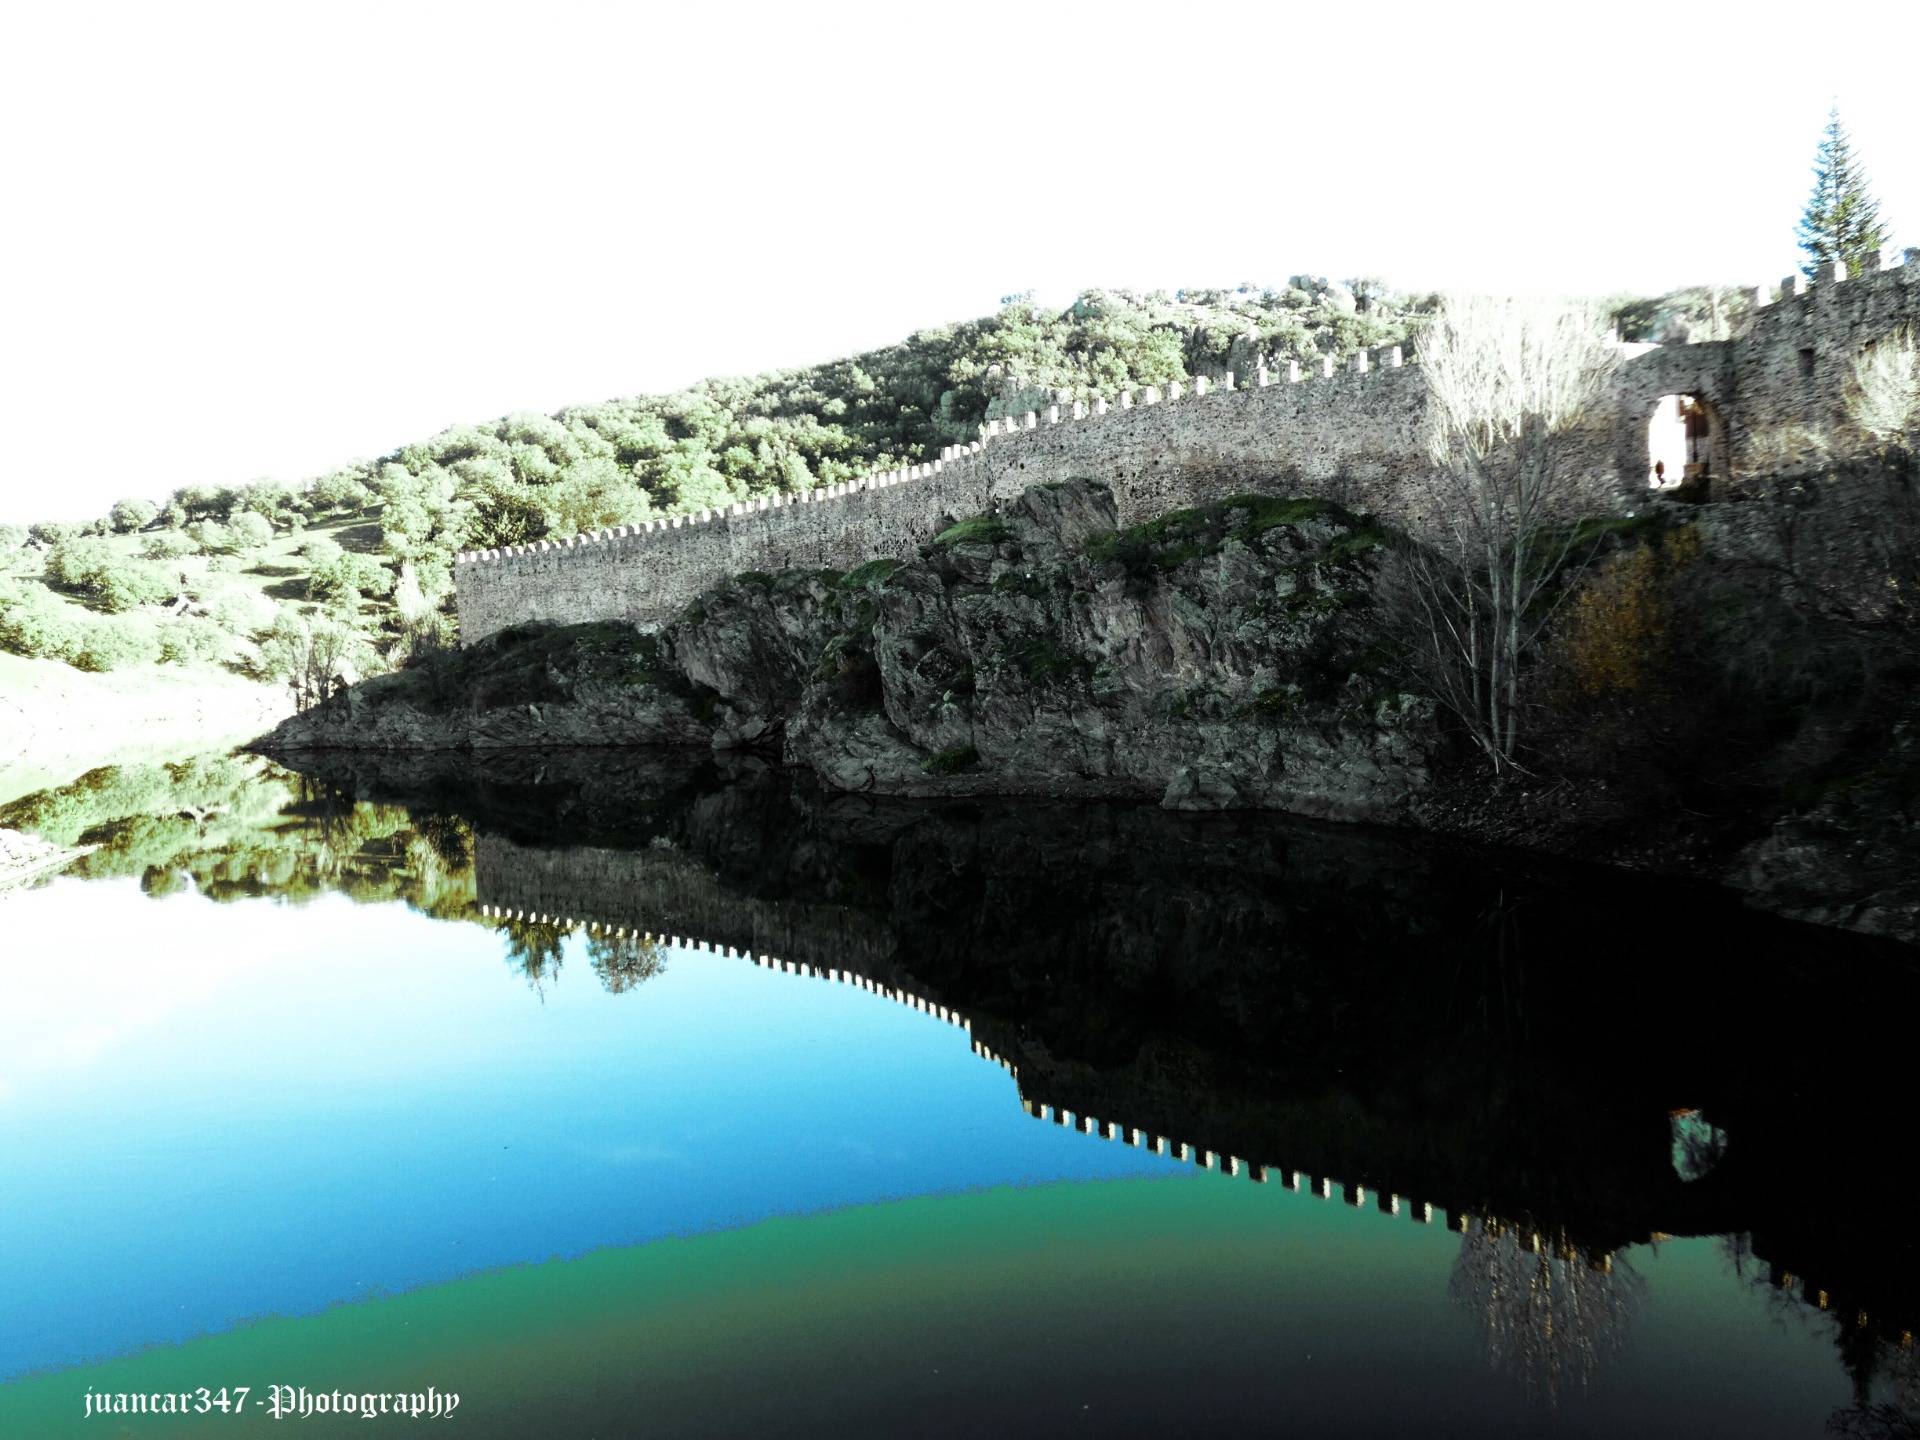 Lozoya River: a mirror